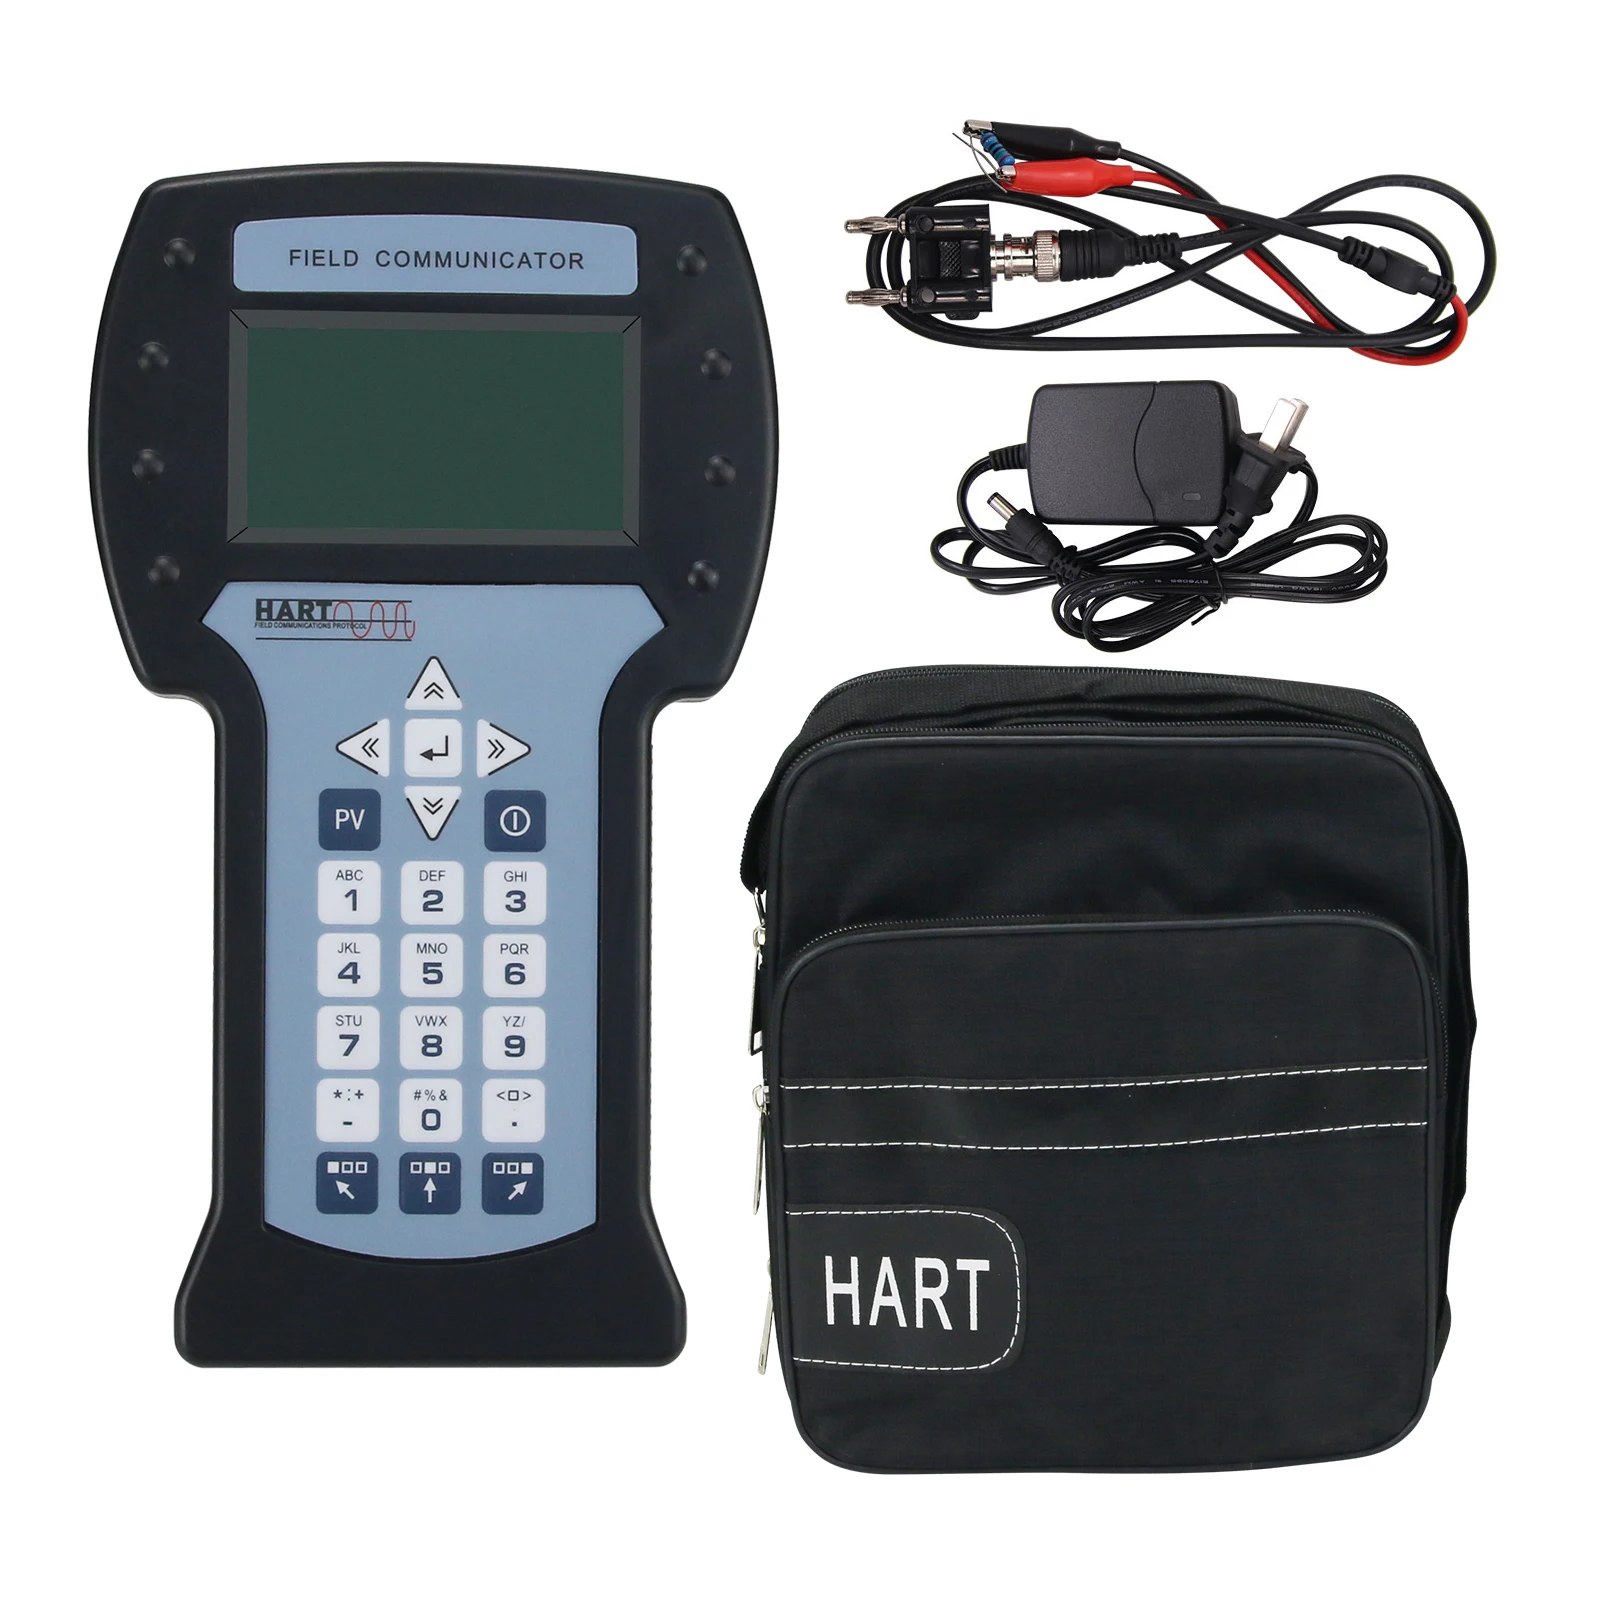 Hart475 Hart Field Communicator for Pressure Temperature Transmitter Calibration 